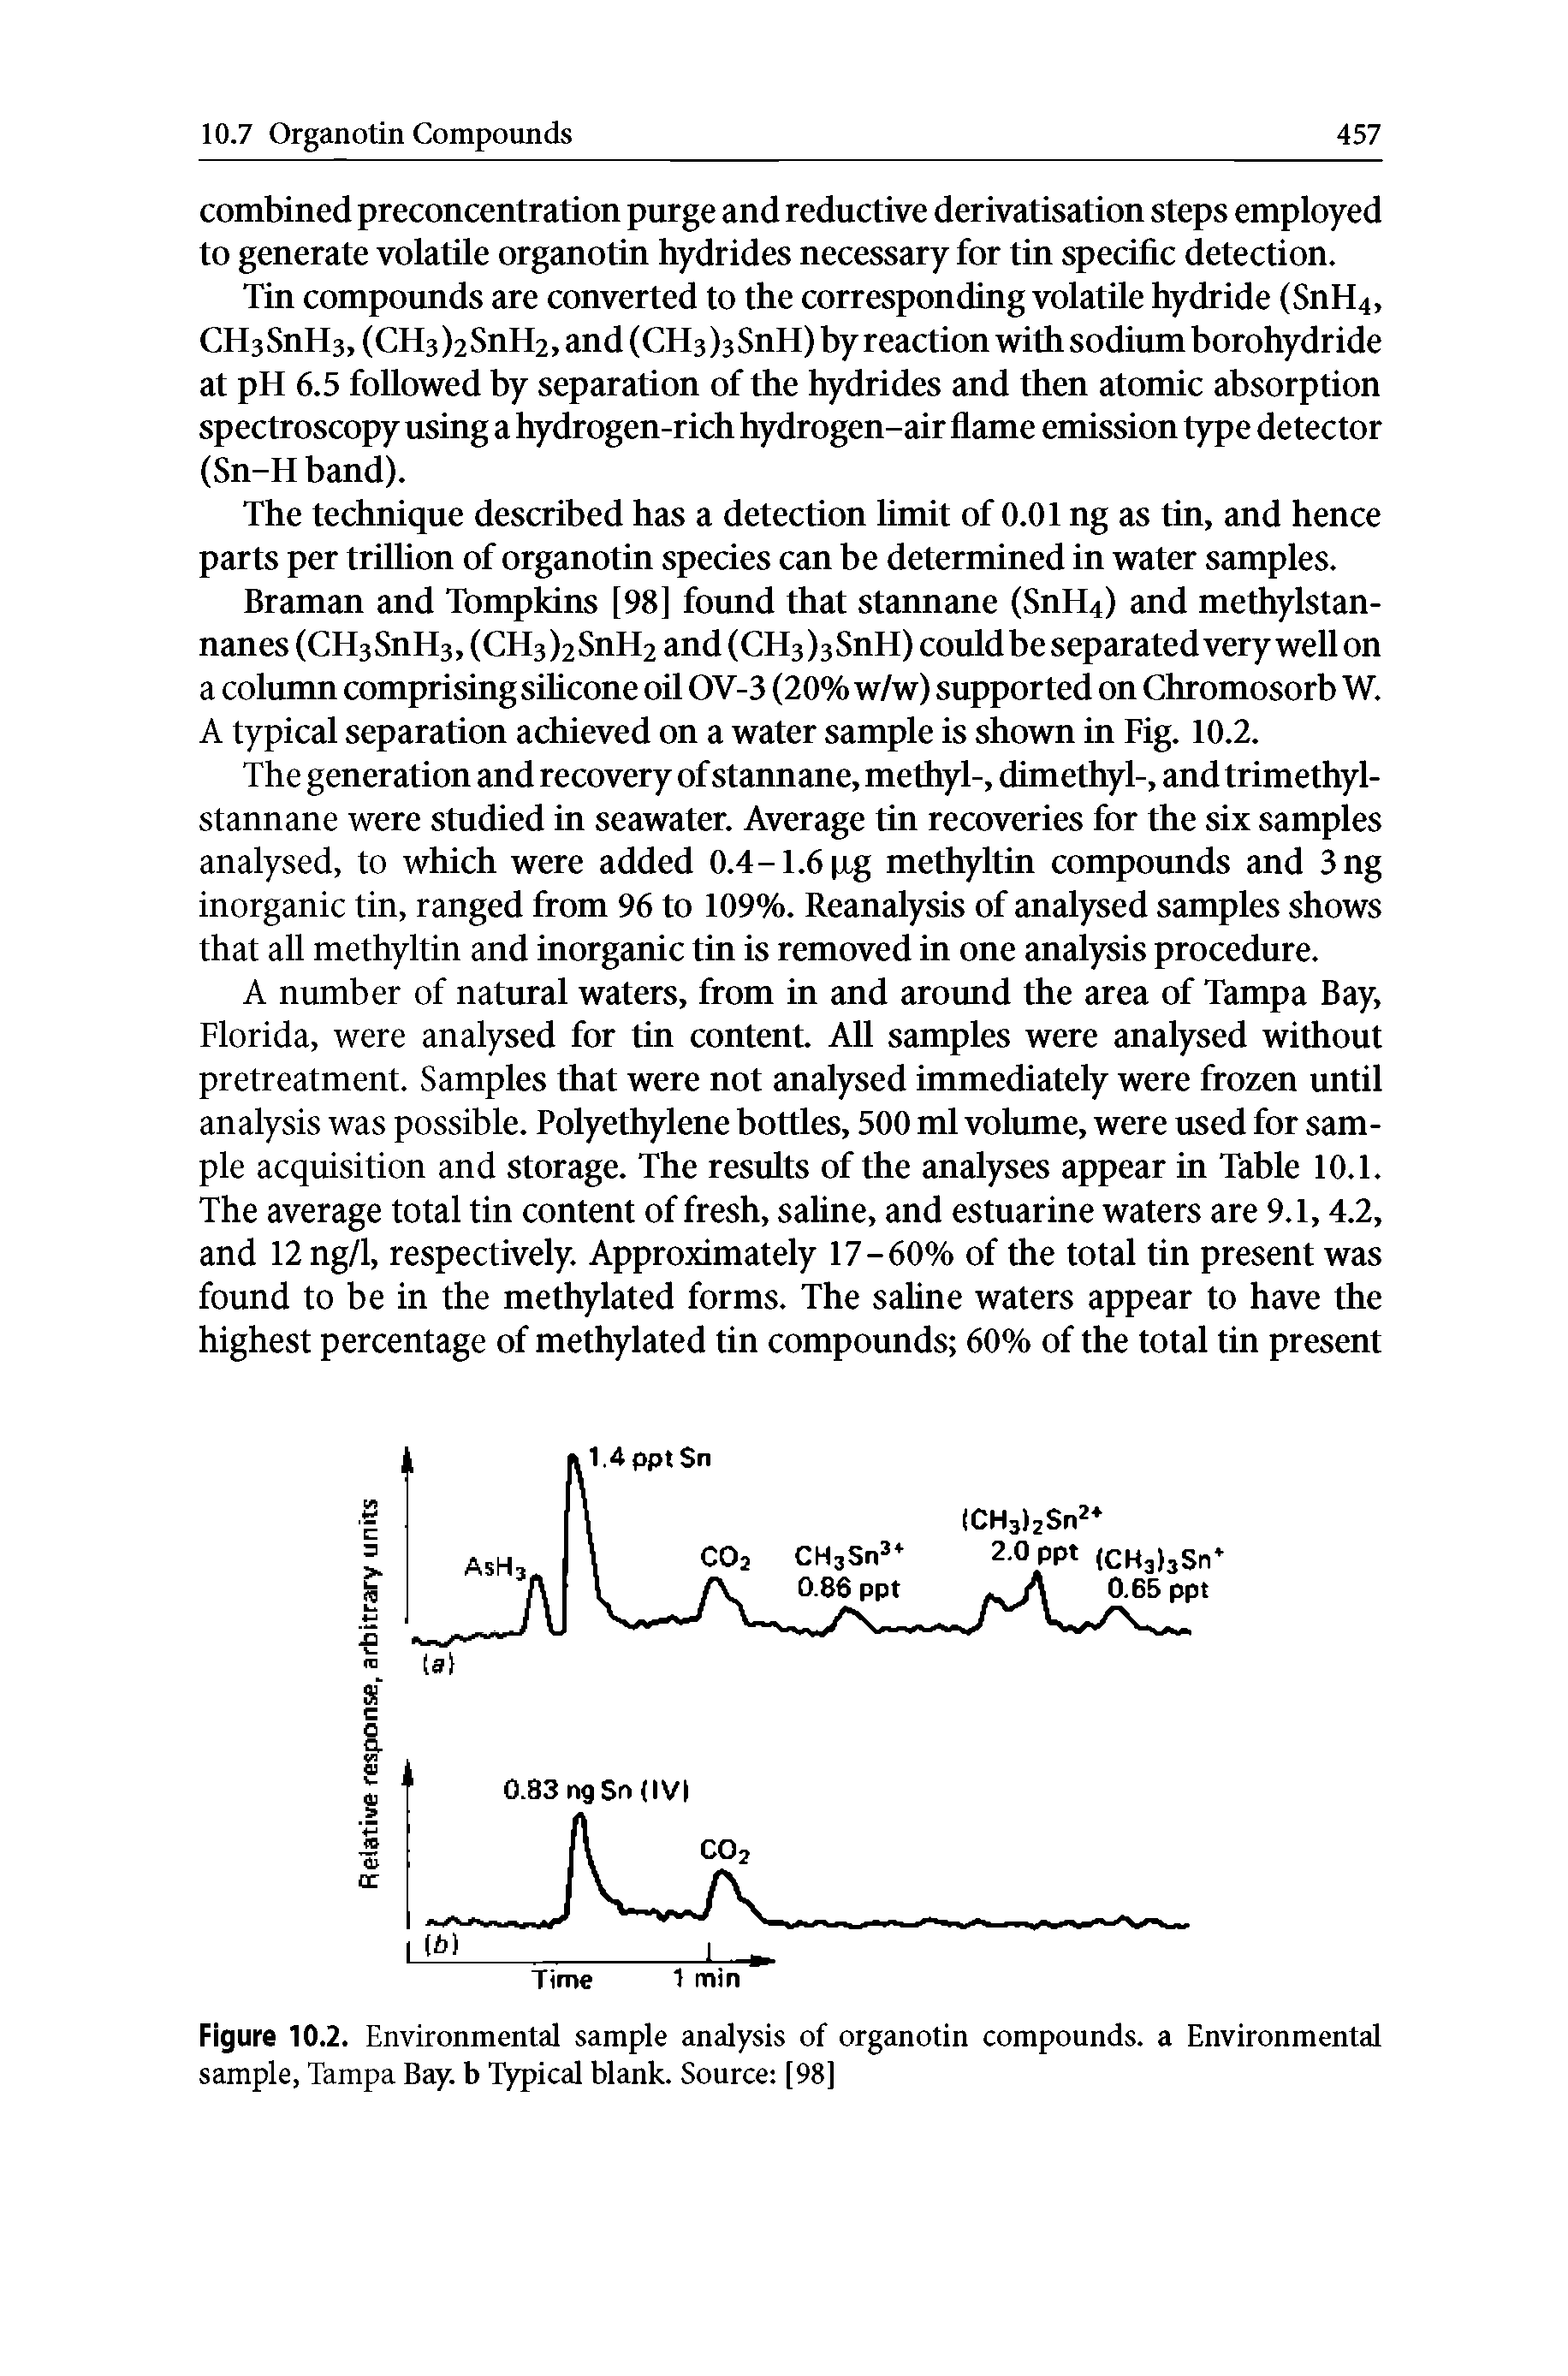 Figure 10.2. Environmental sample analysis of organotin compounds, a Environmental sample, Tampa Bay. b Typical blank. Source [98]...